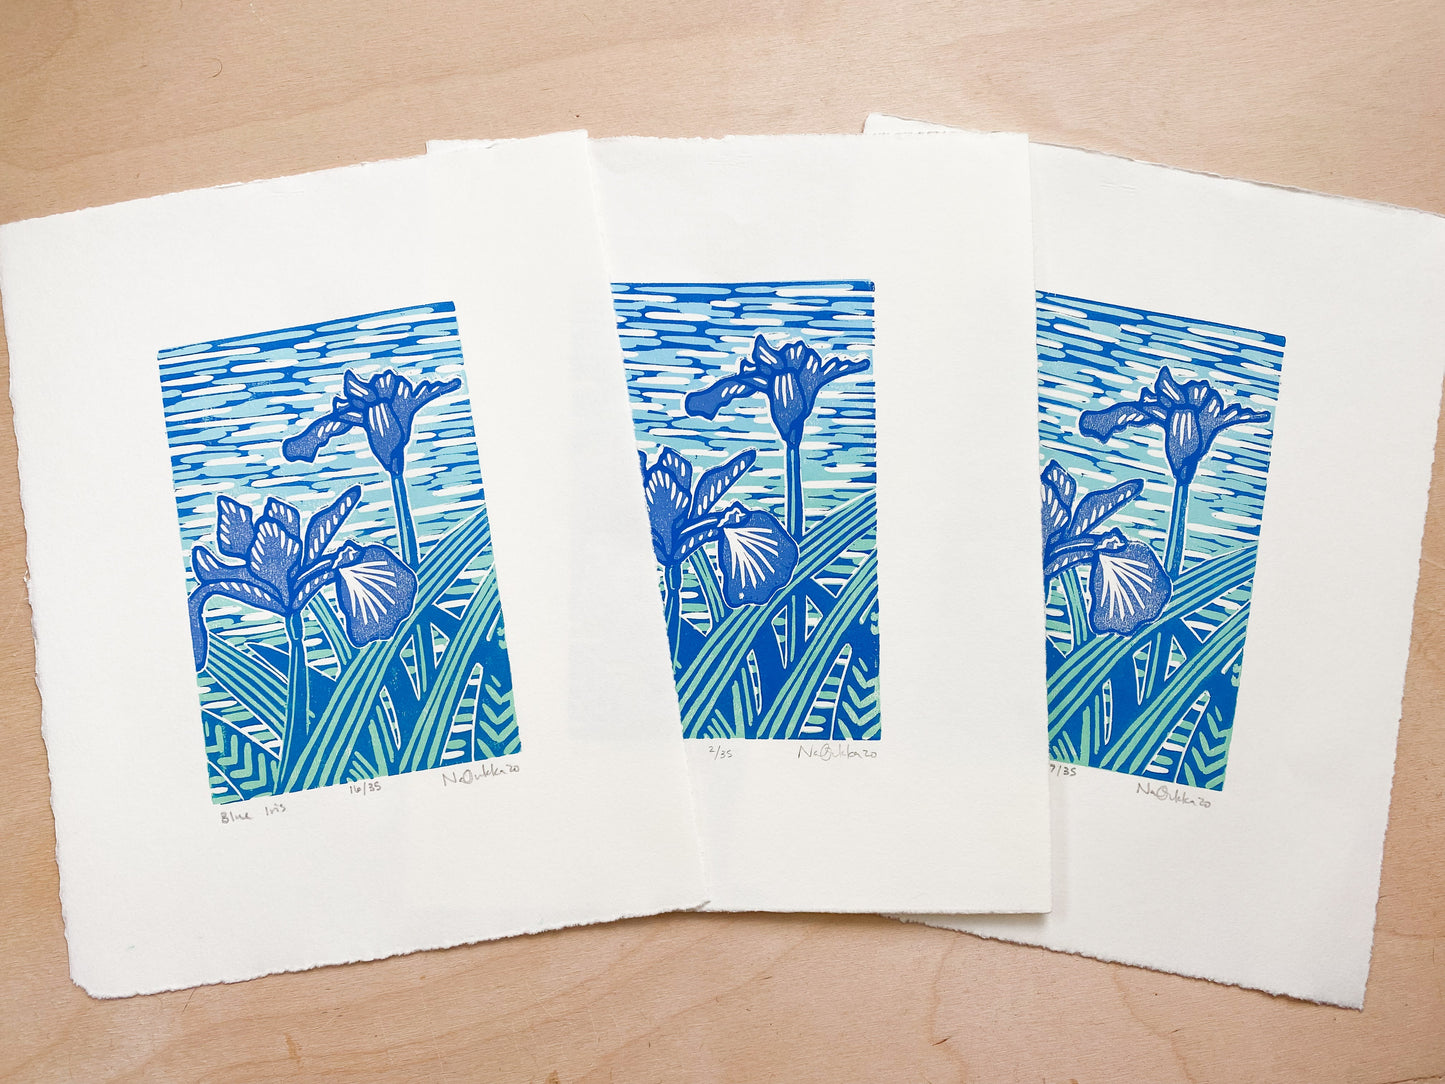 Blue Iris Woodcut Print